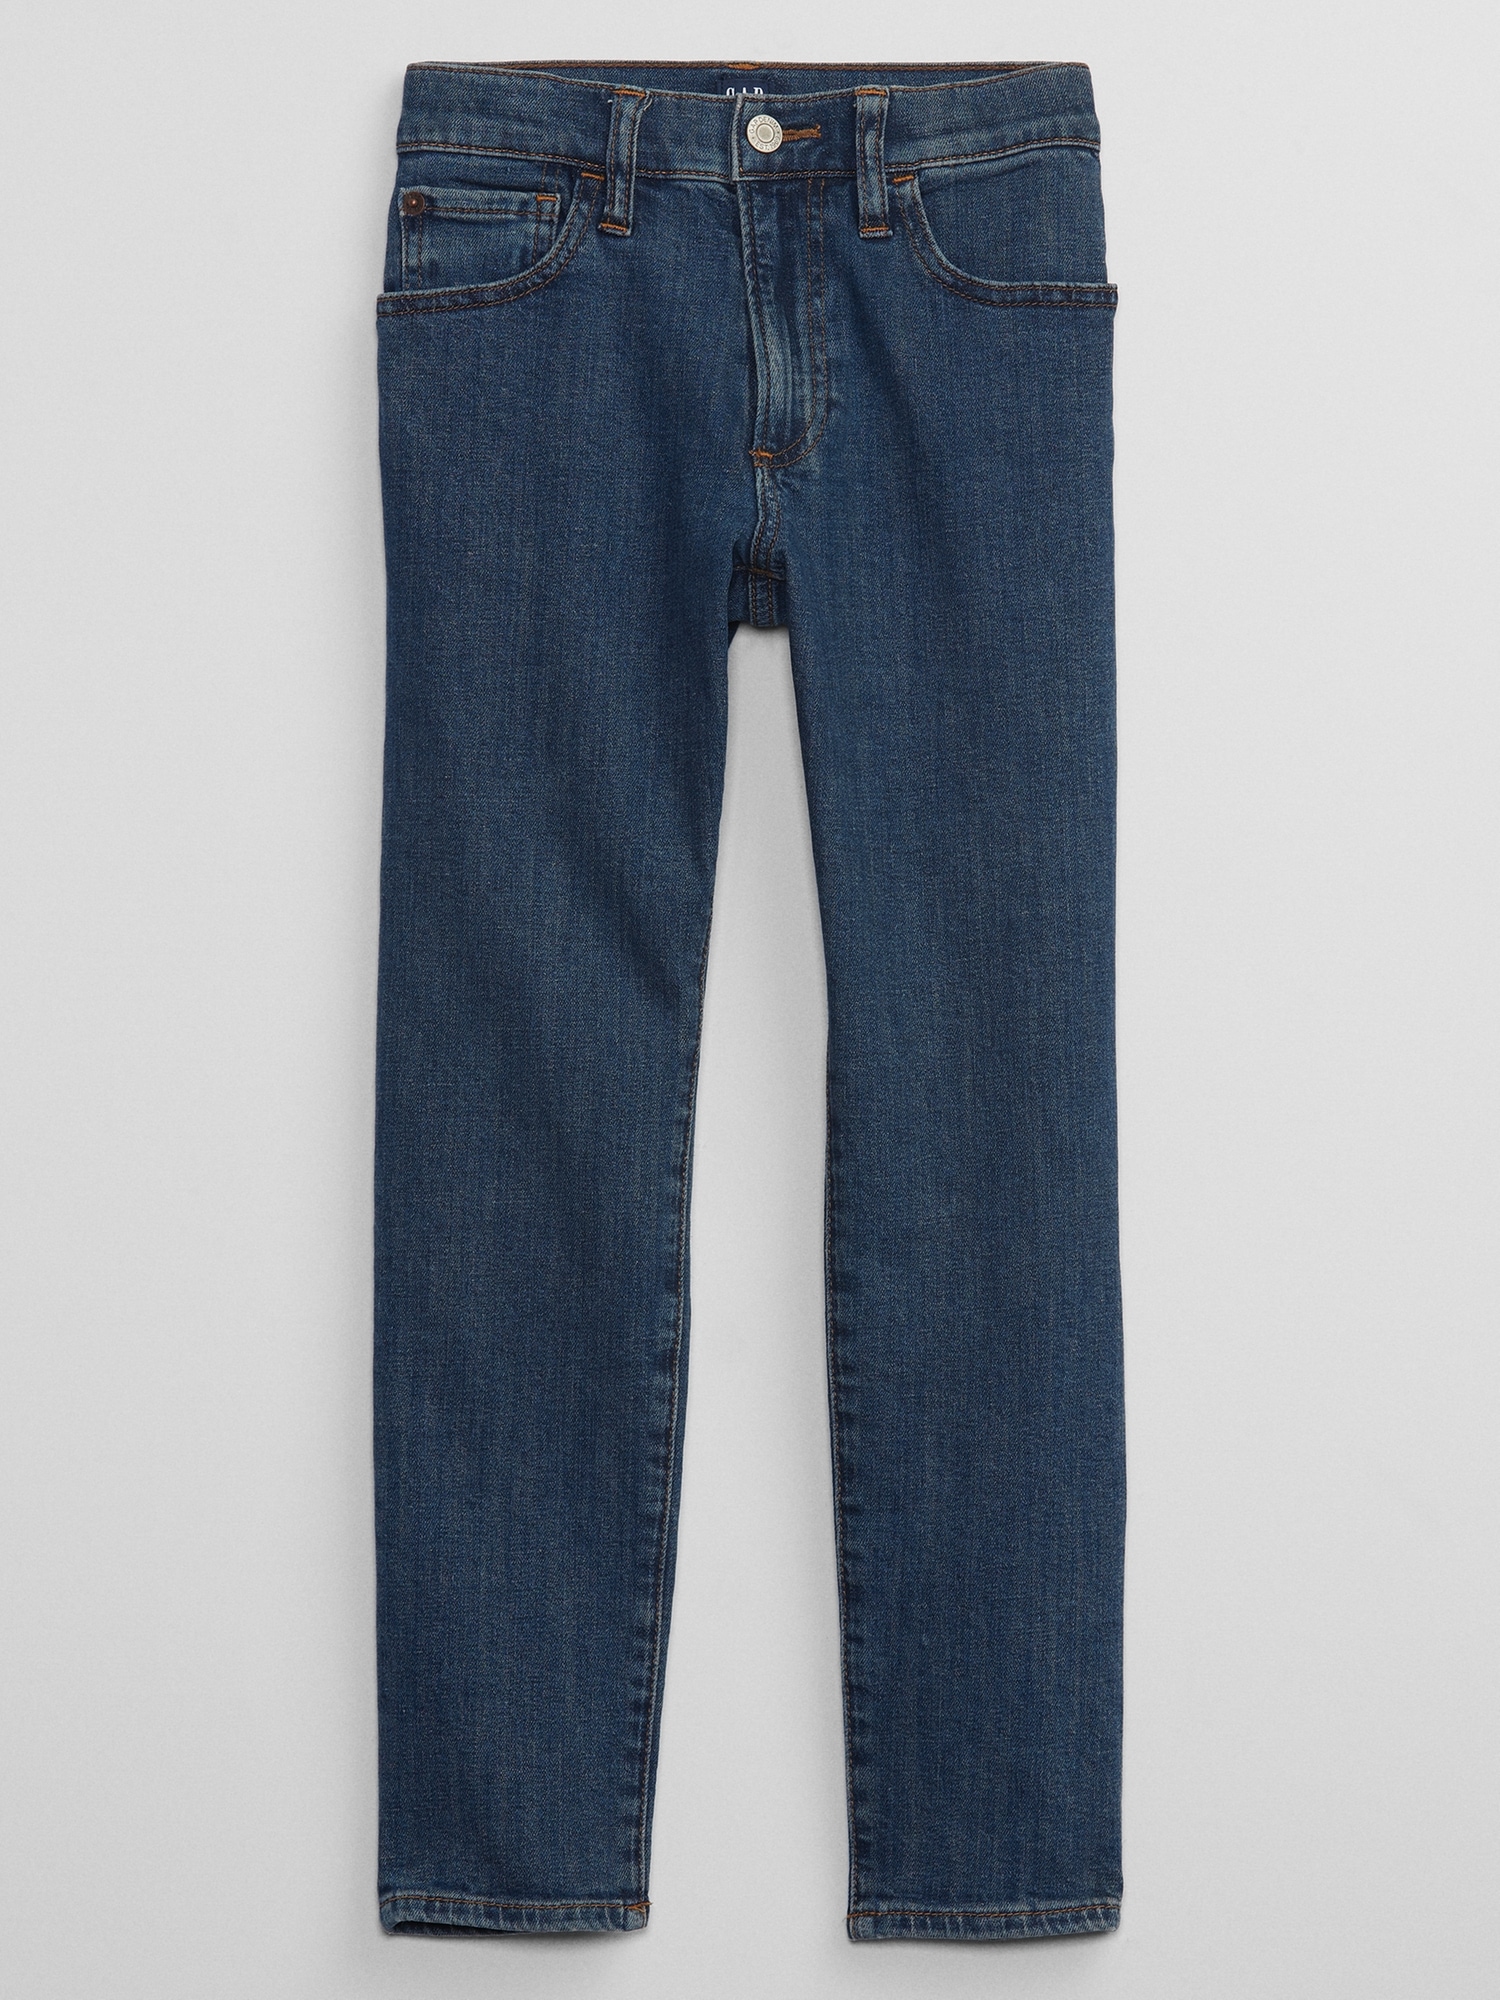 Kids Slim Taper Jeans | Gap Factory